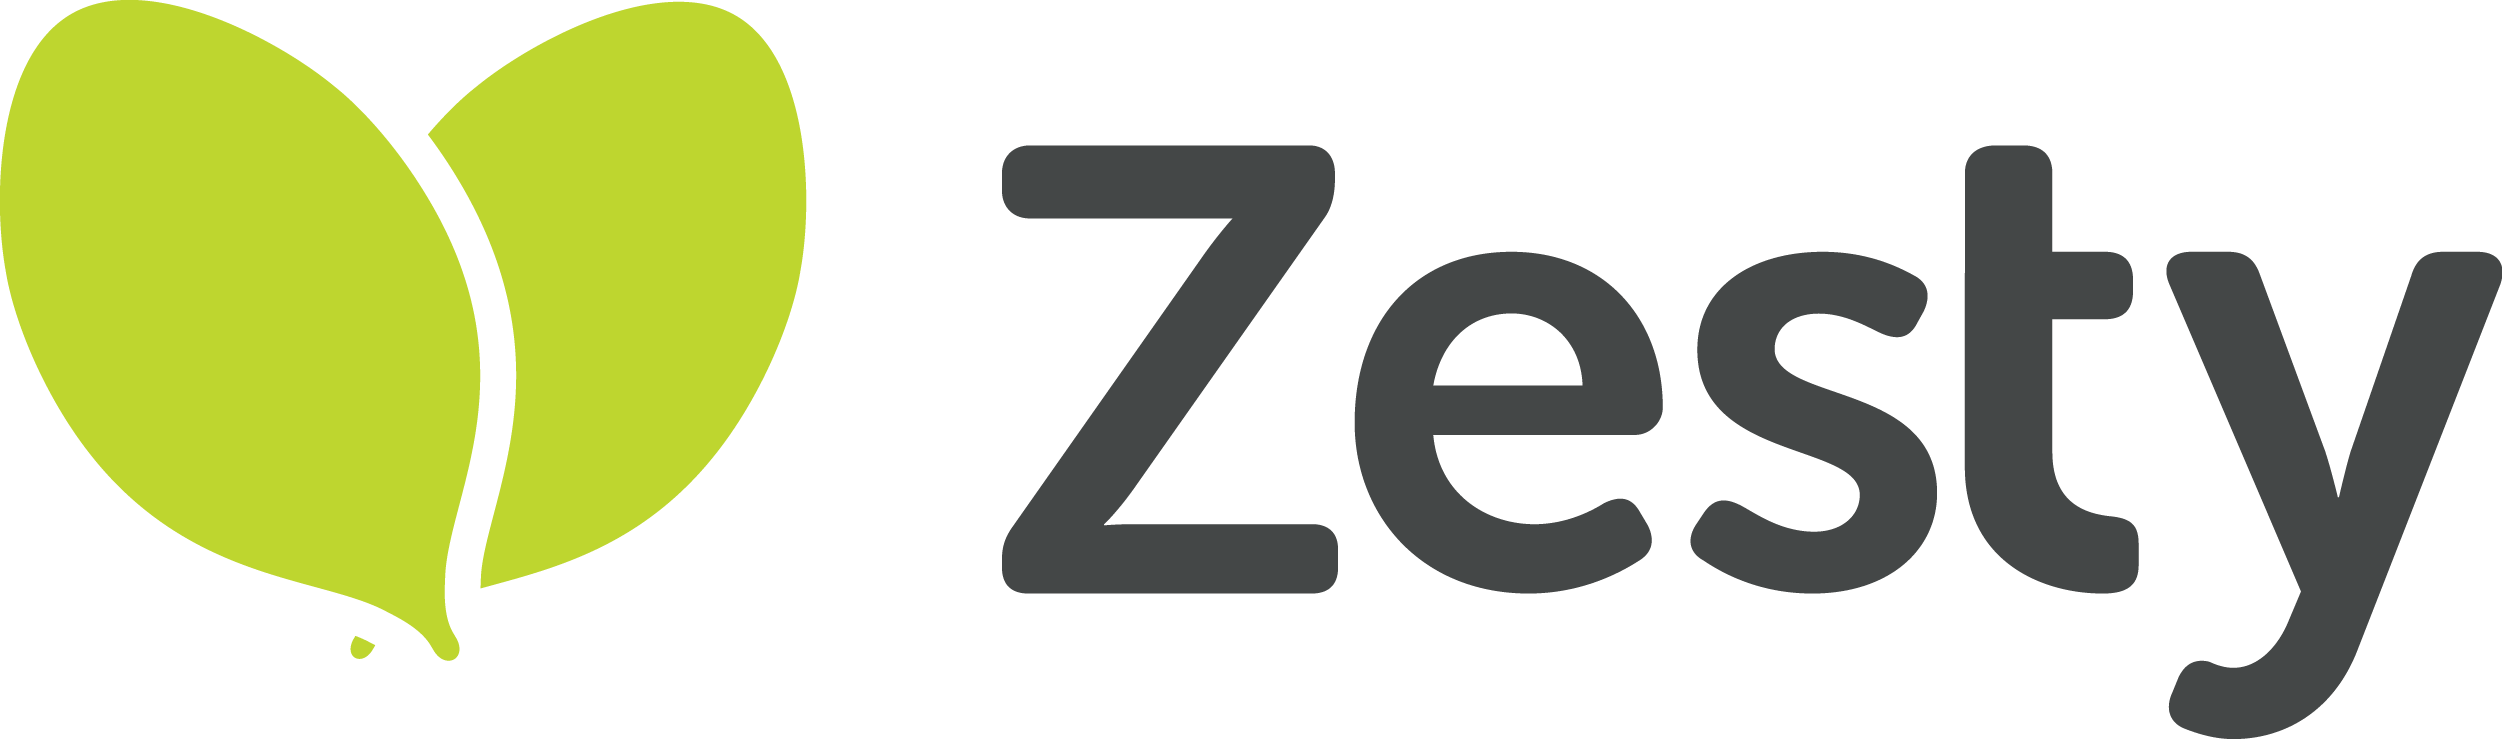 Zesty Logo - Zesty Competitors, Revenue and Employees Company Profile